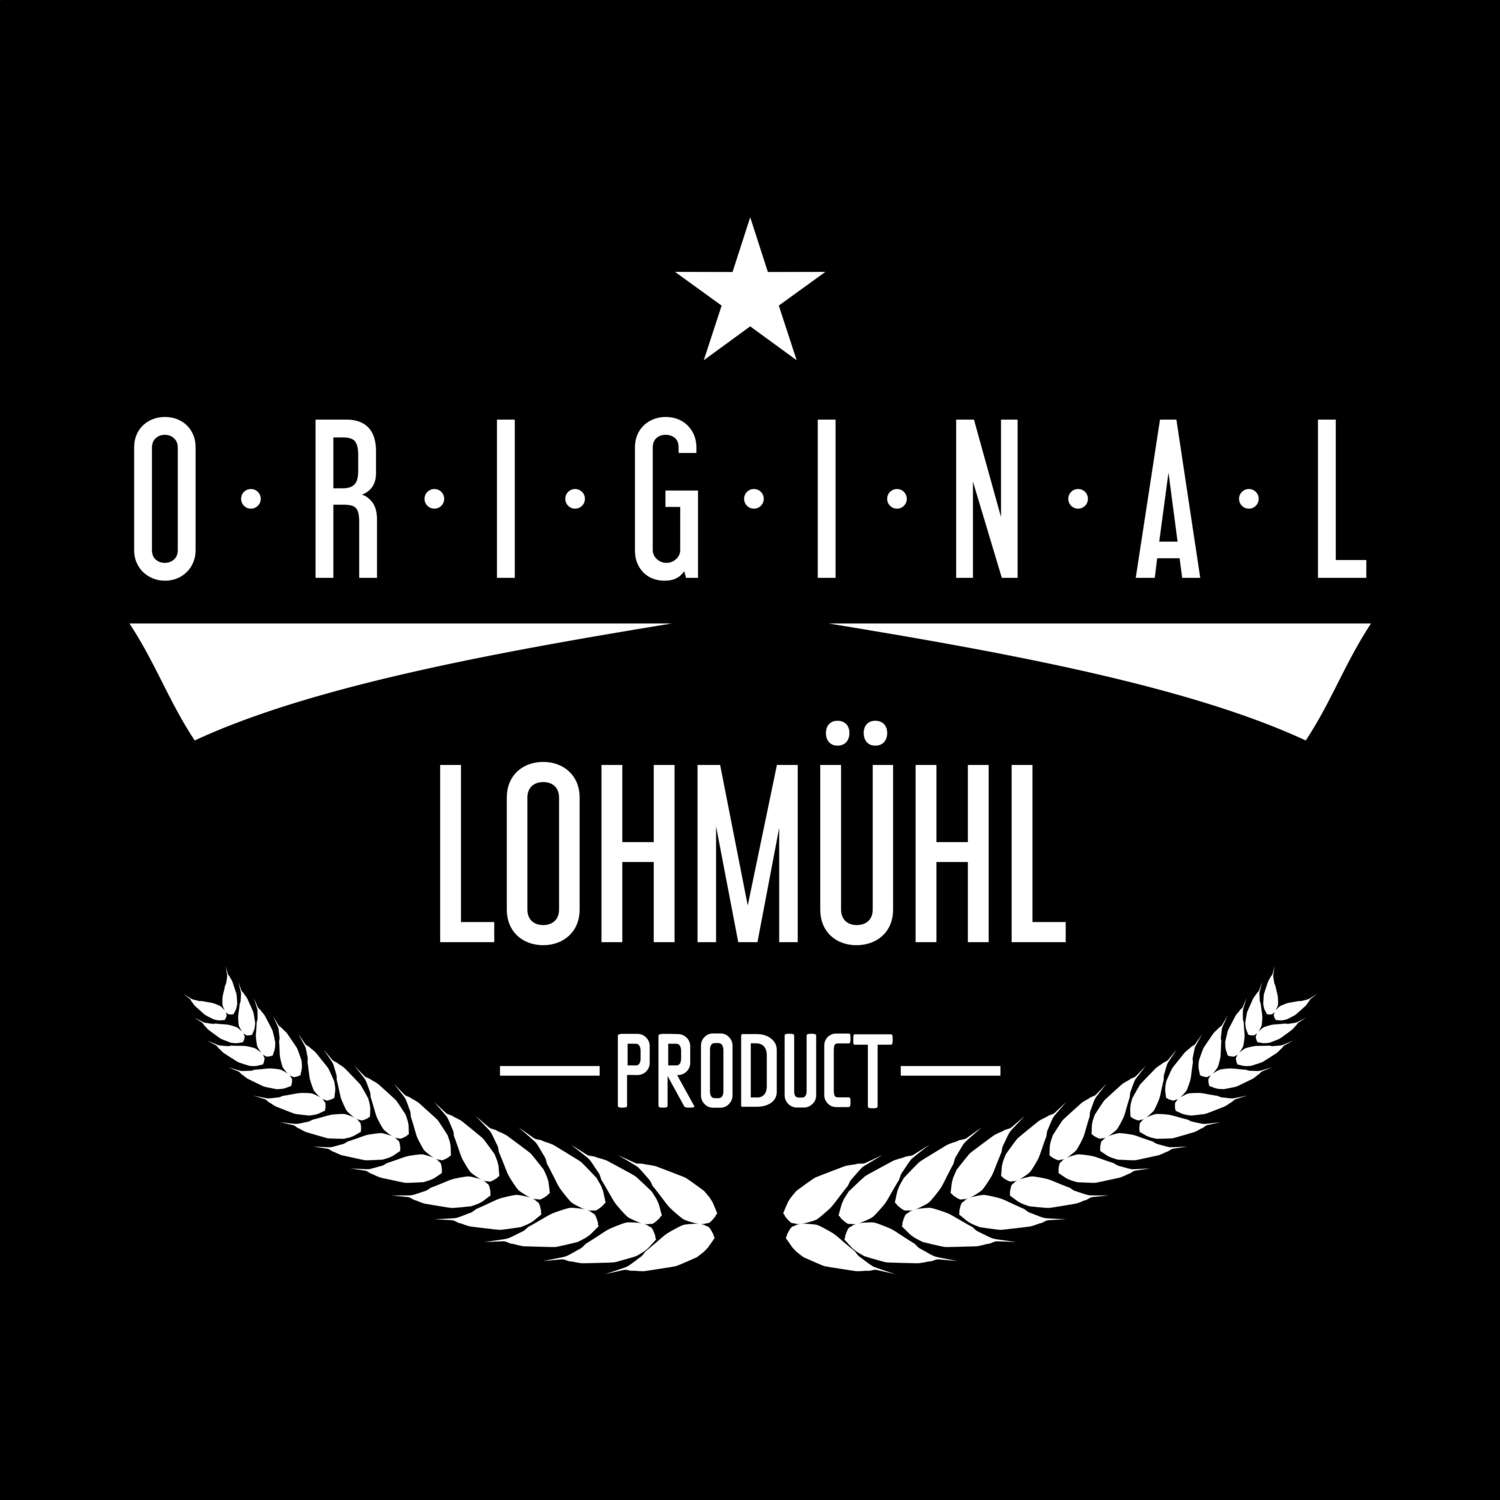 Lohmühl T-Shirt »Original Product«